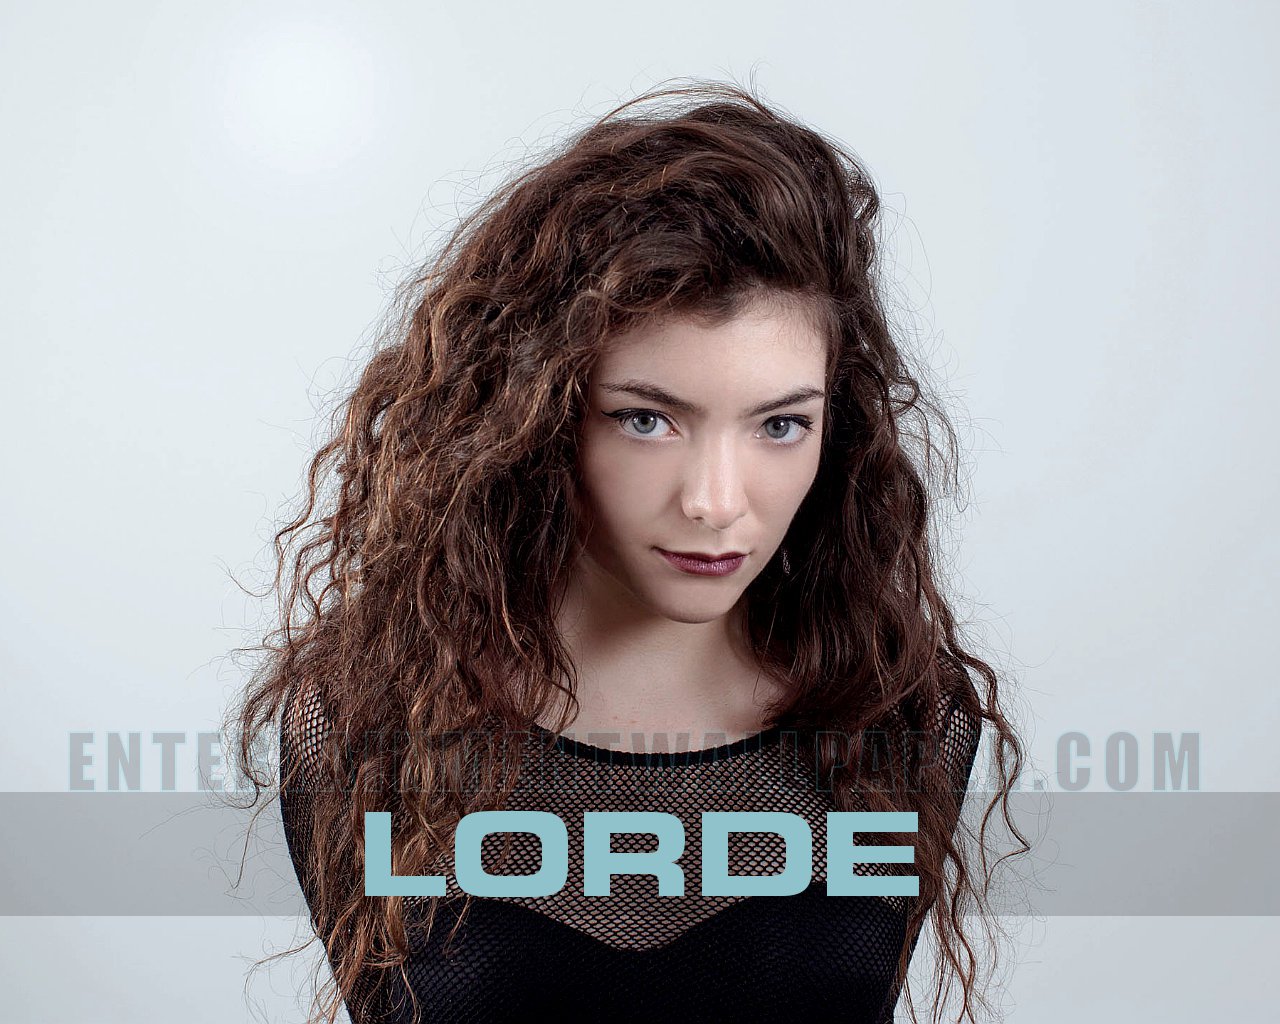 Lorde Wallpaper - Original size, download now.